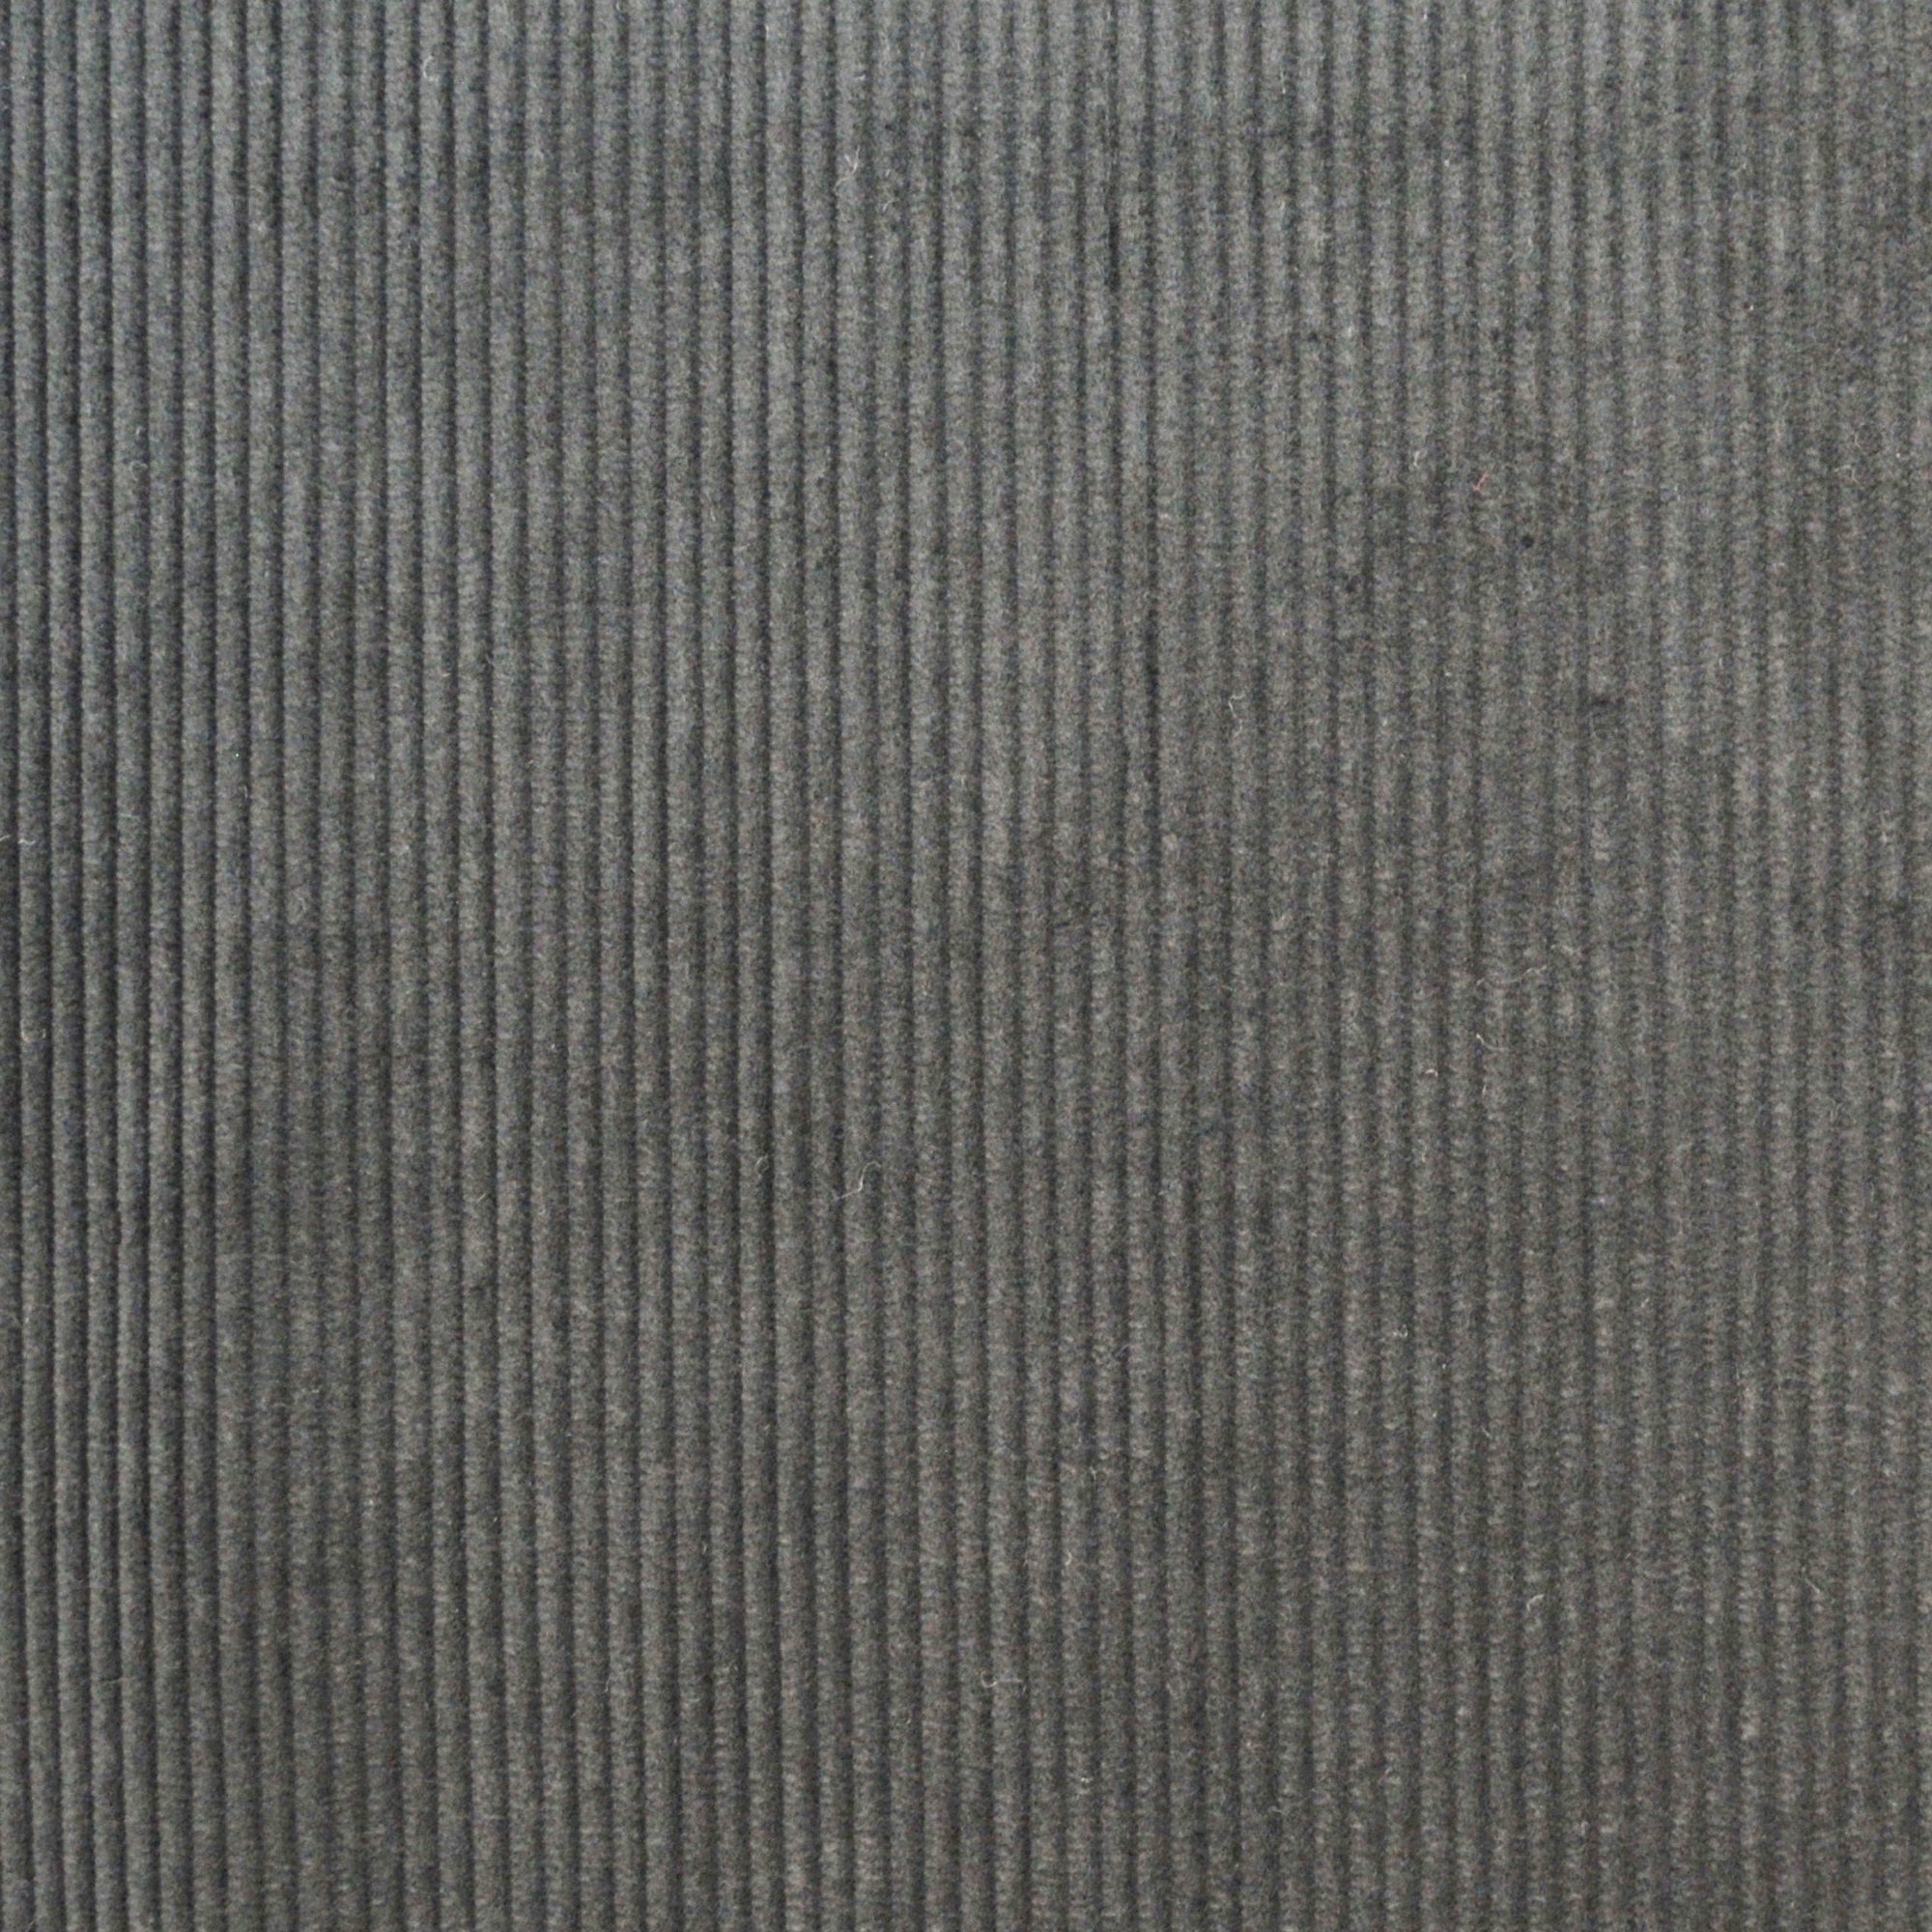 corduroy fabric texture